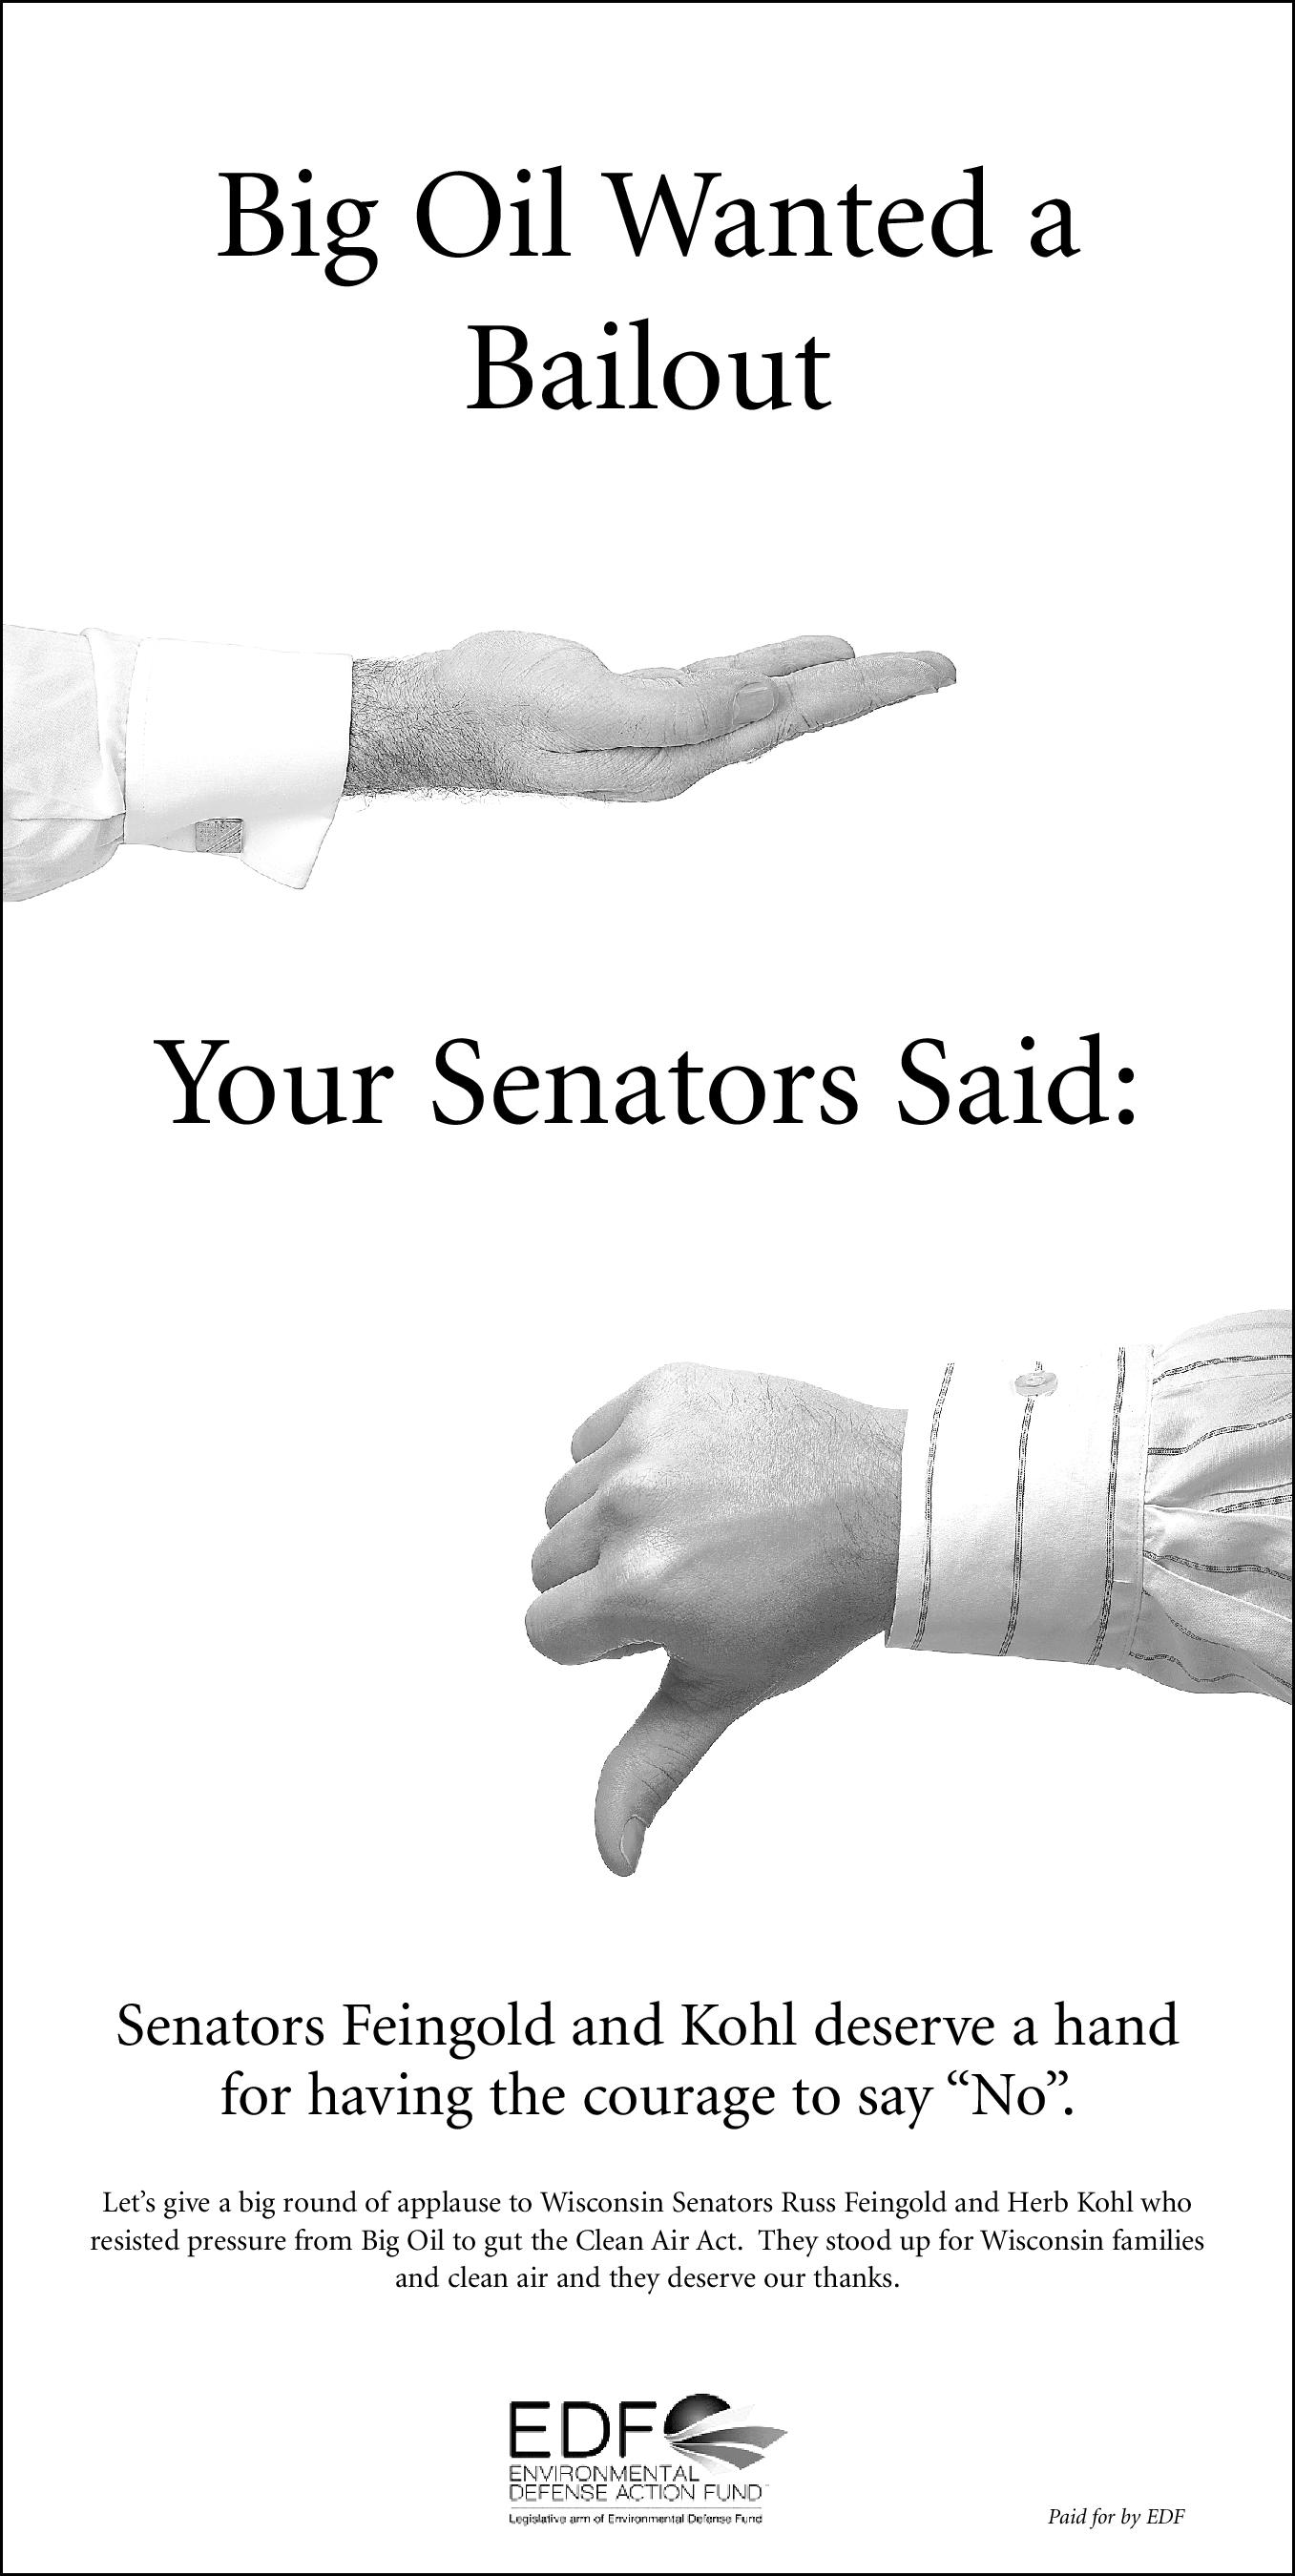 Thank You for Saying "No" to Big Oil: Senators Feingold and Kohl